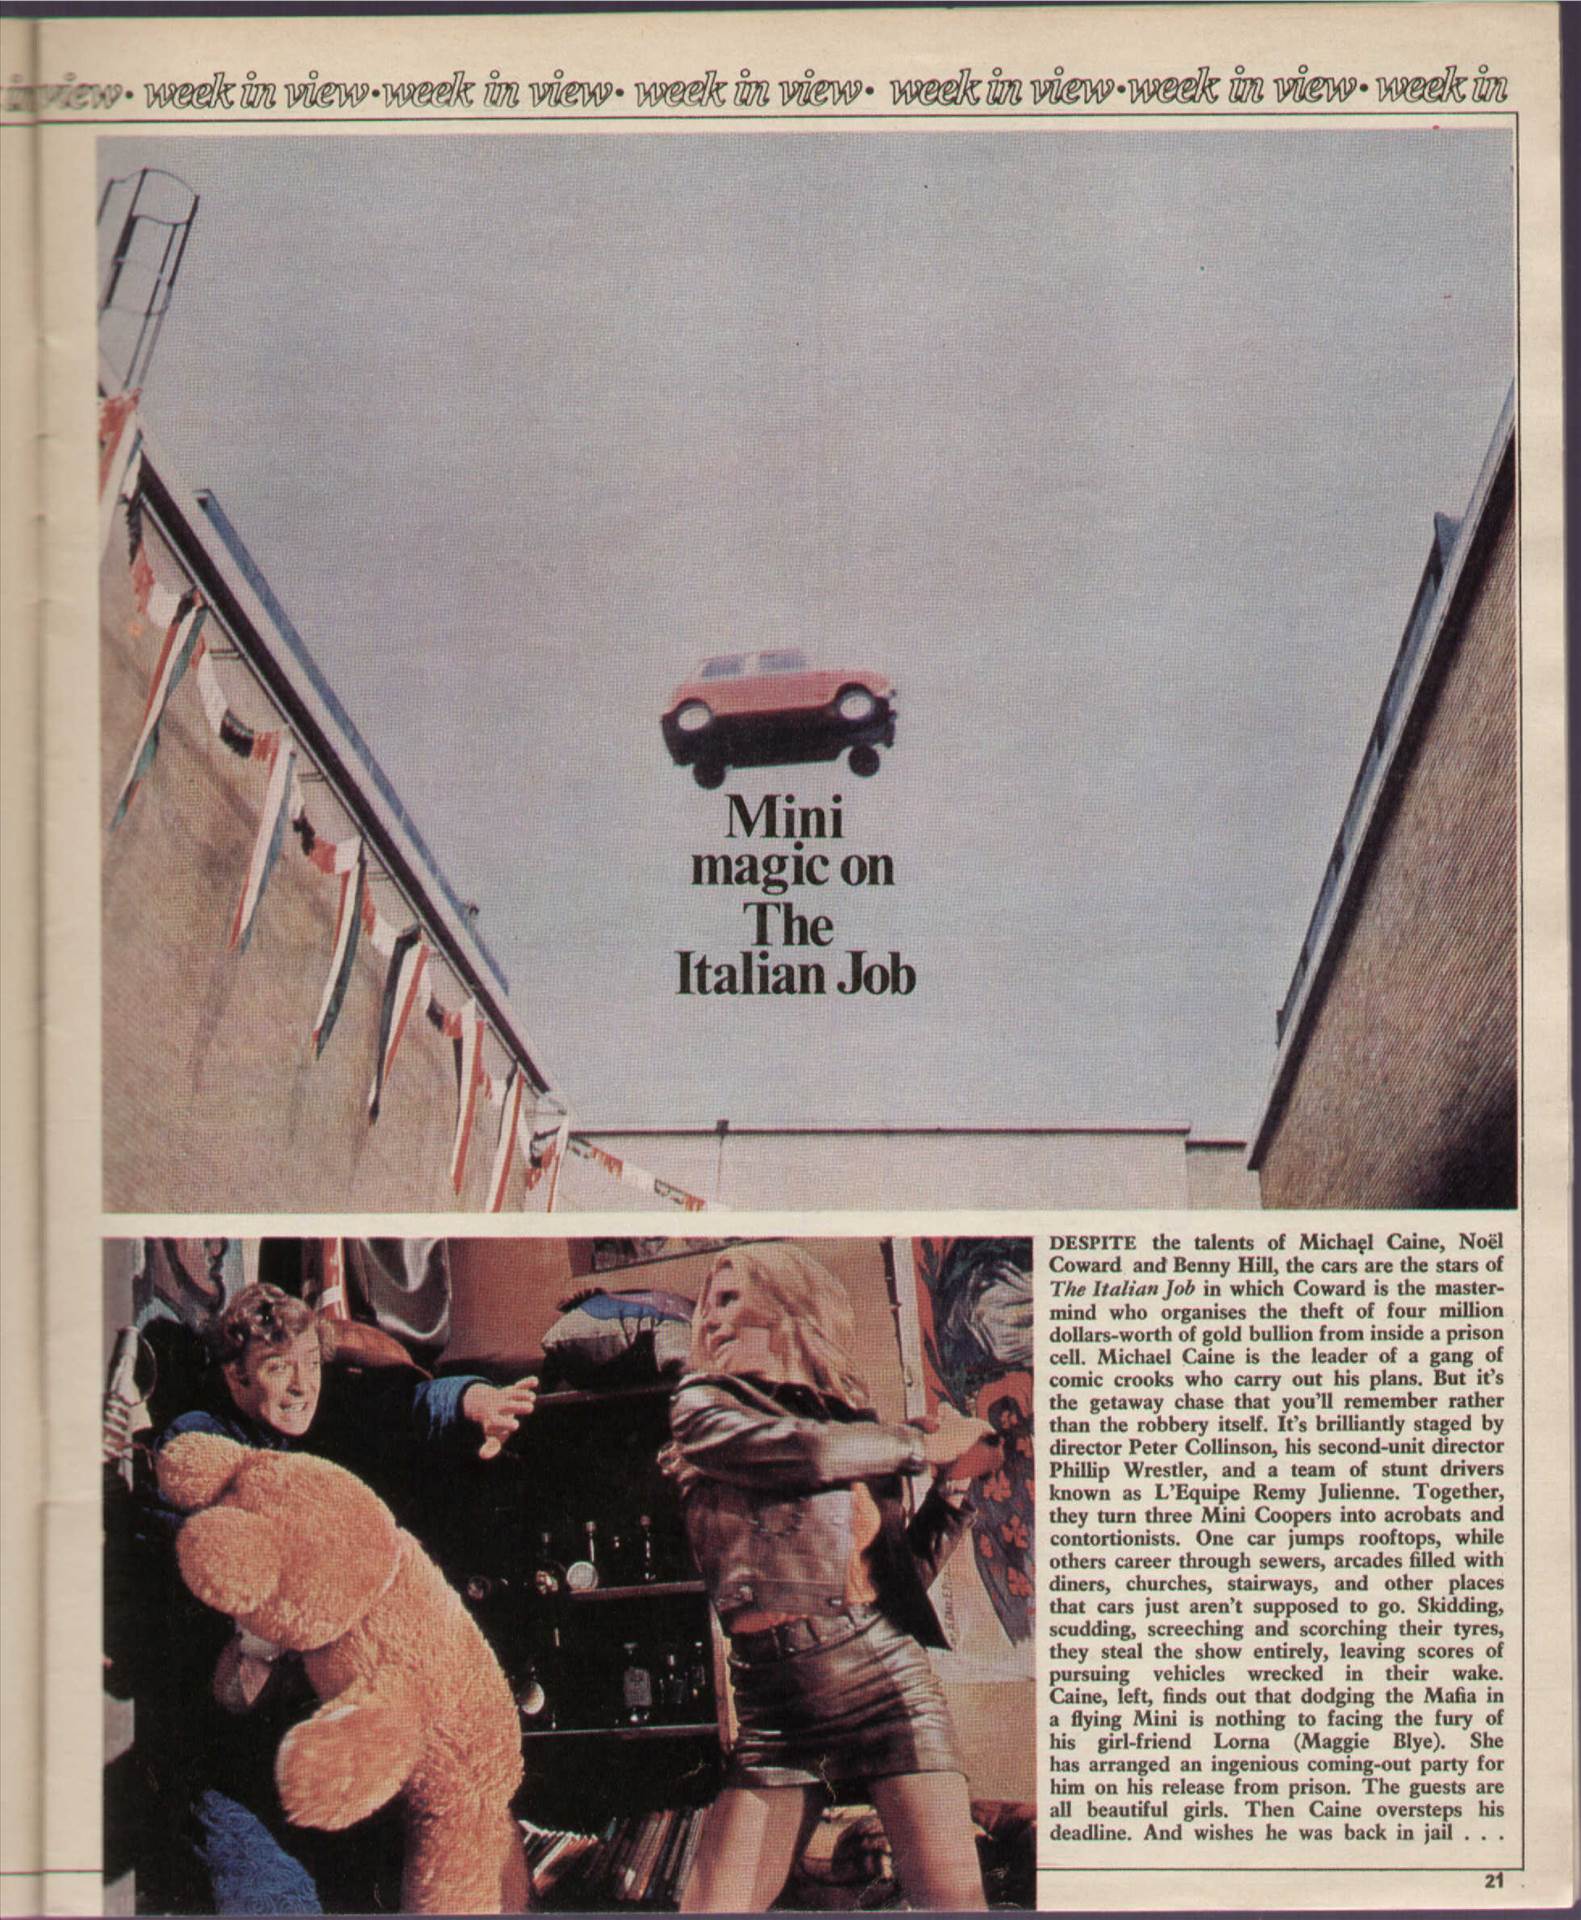 Jan 24th 1976 NFPA-page-16.jpg  by Arthur Pringle